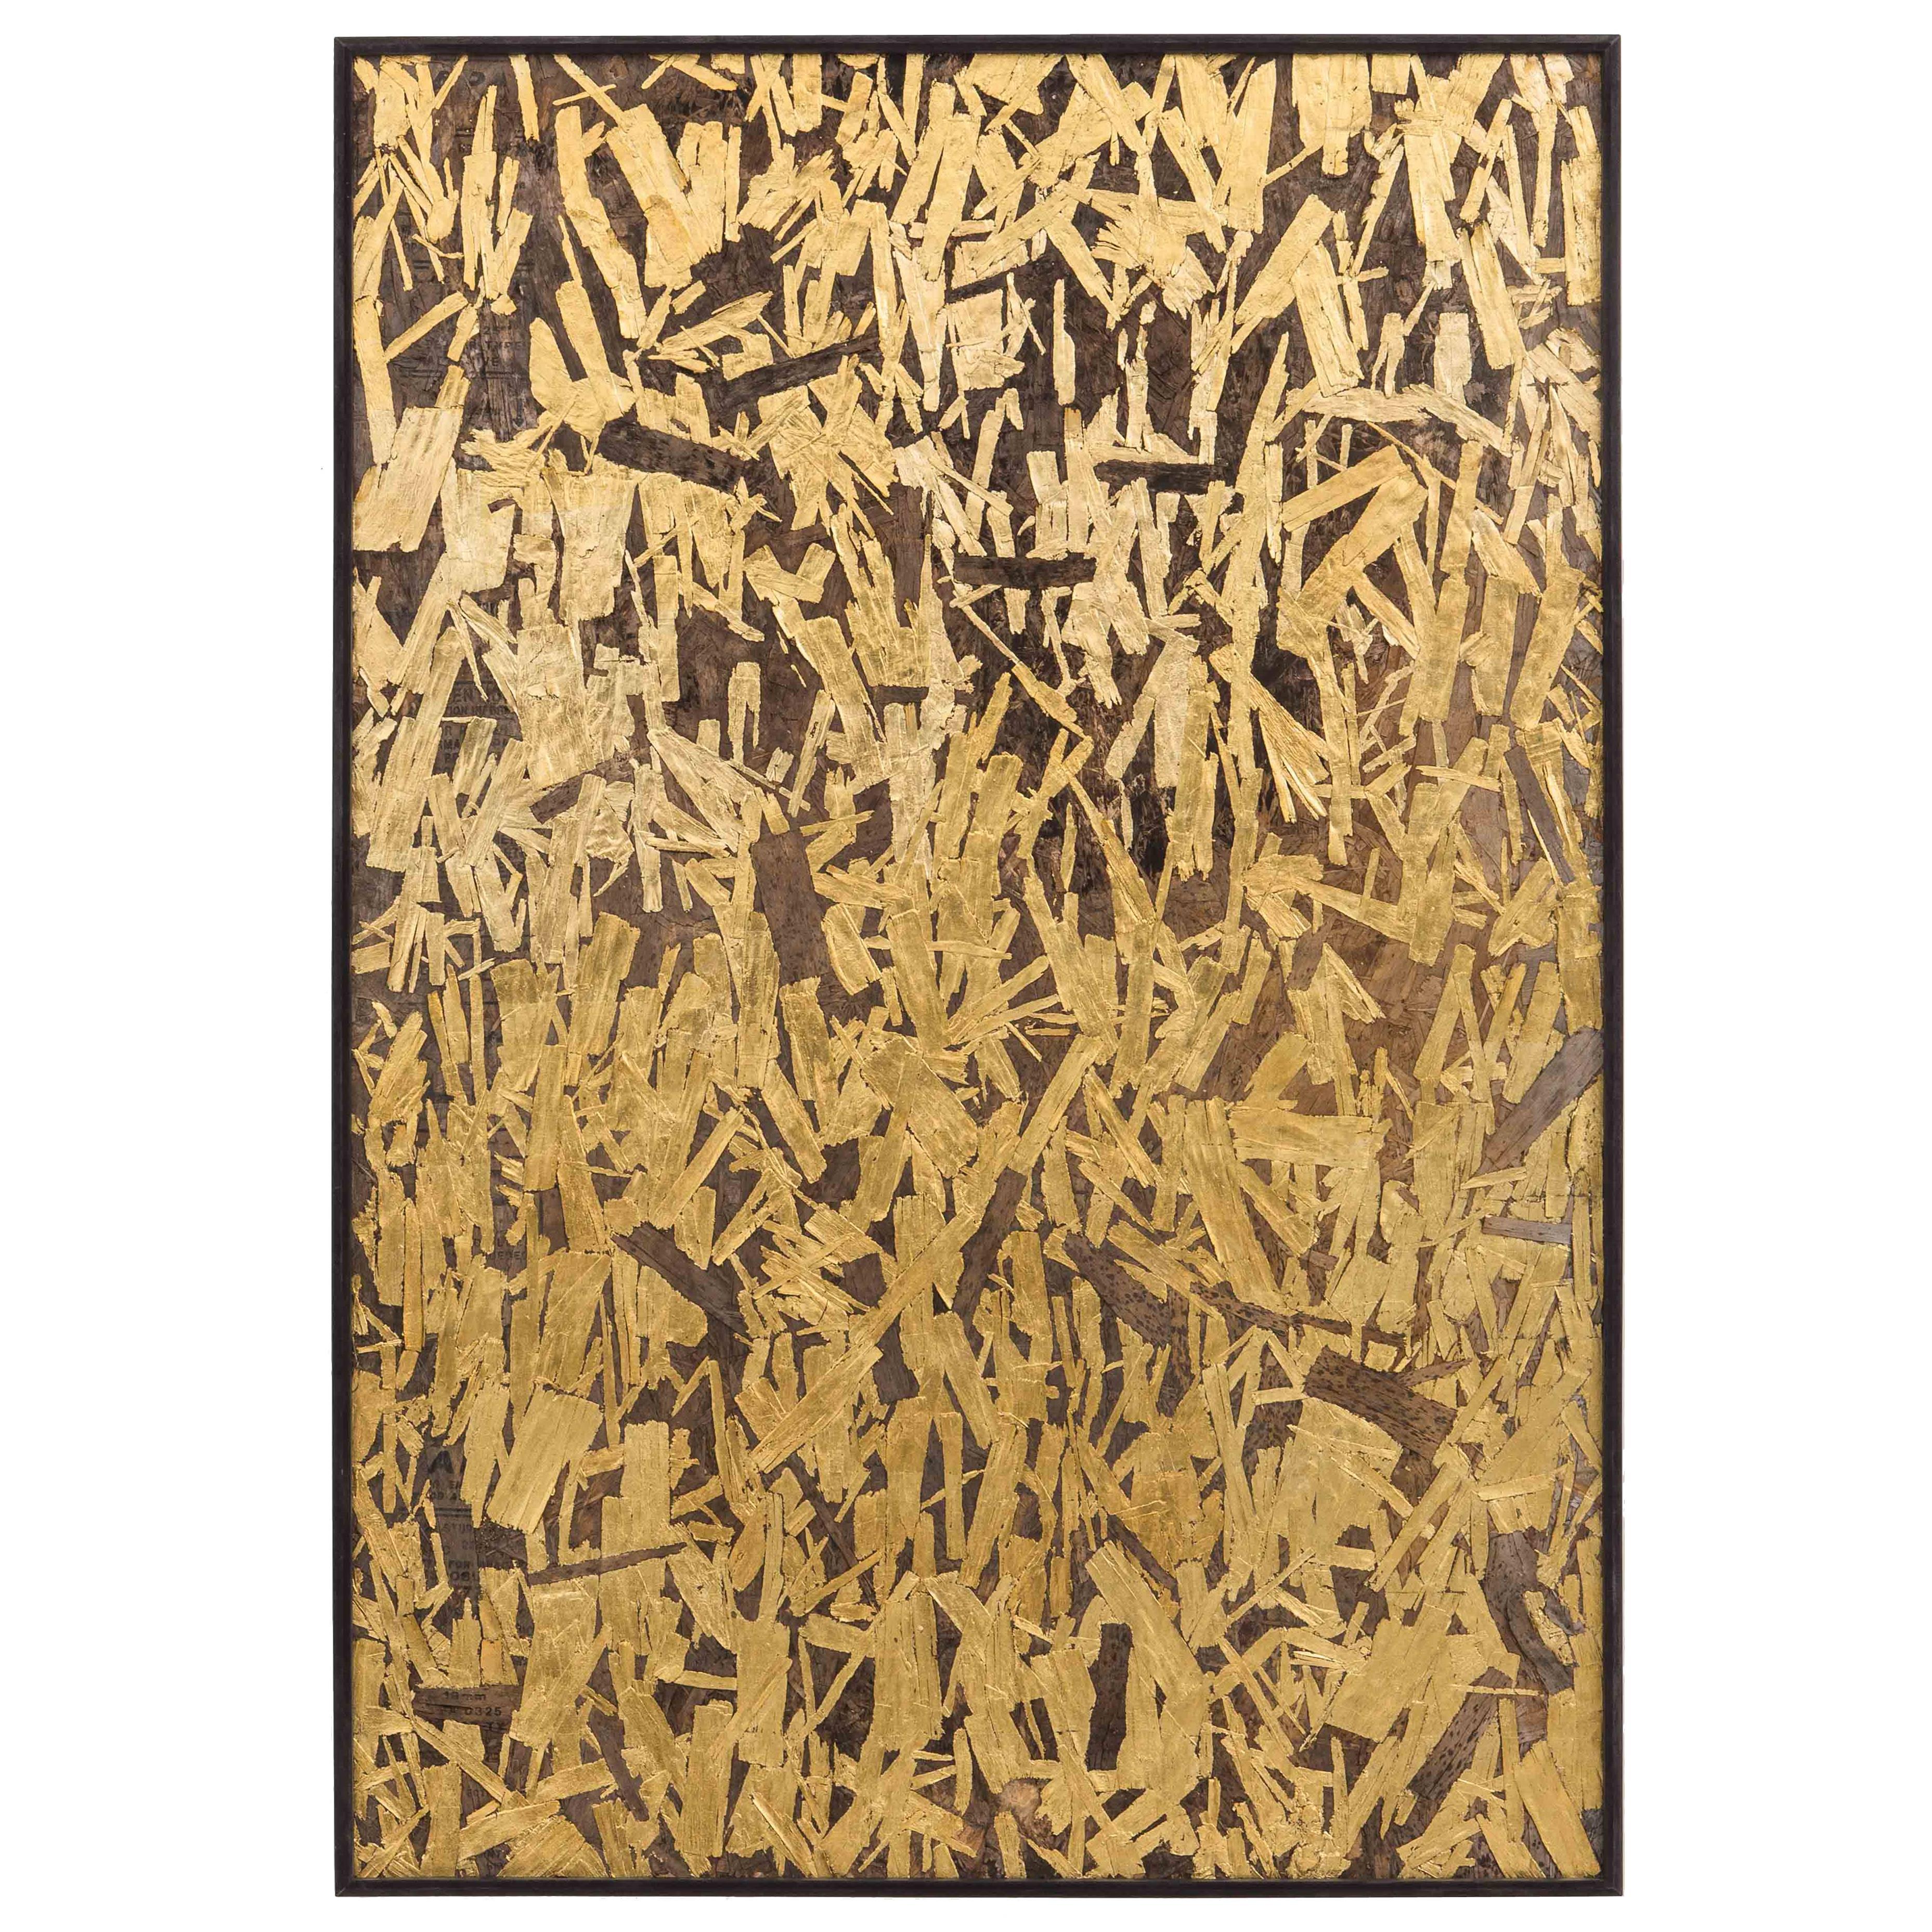 Chris Rucker, Gold Painting 1, USA, 2016